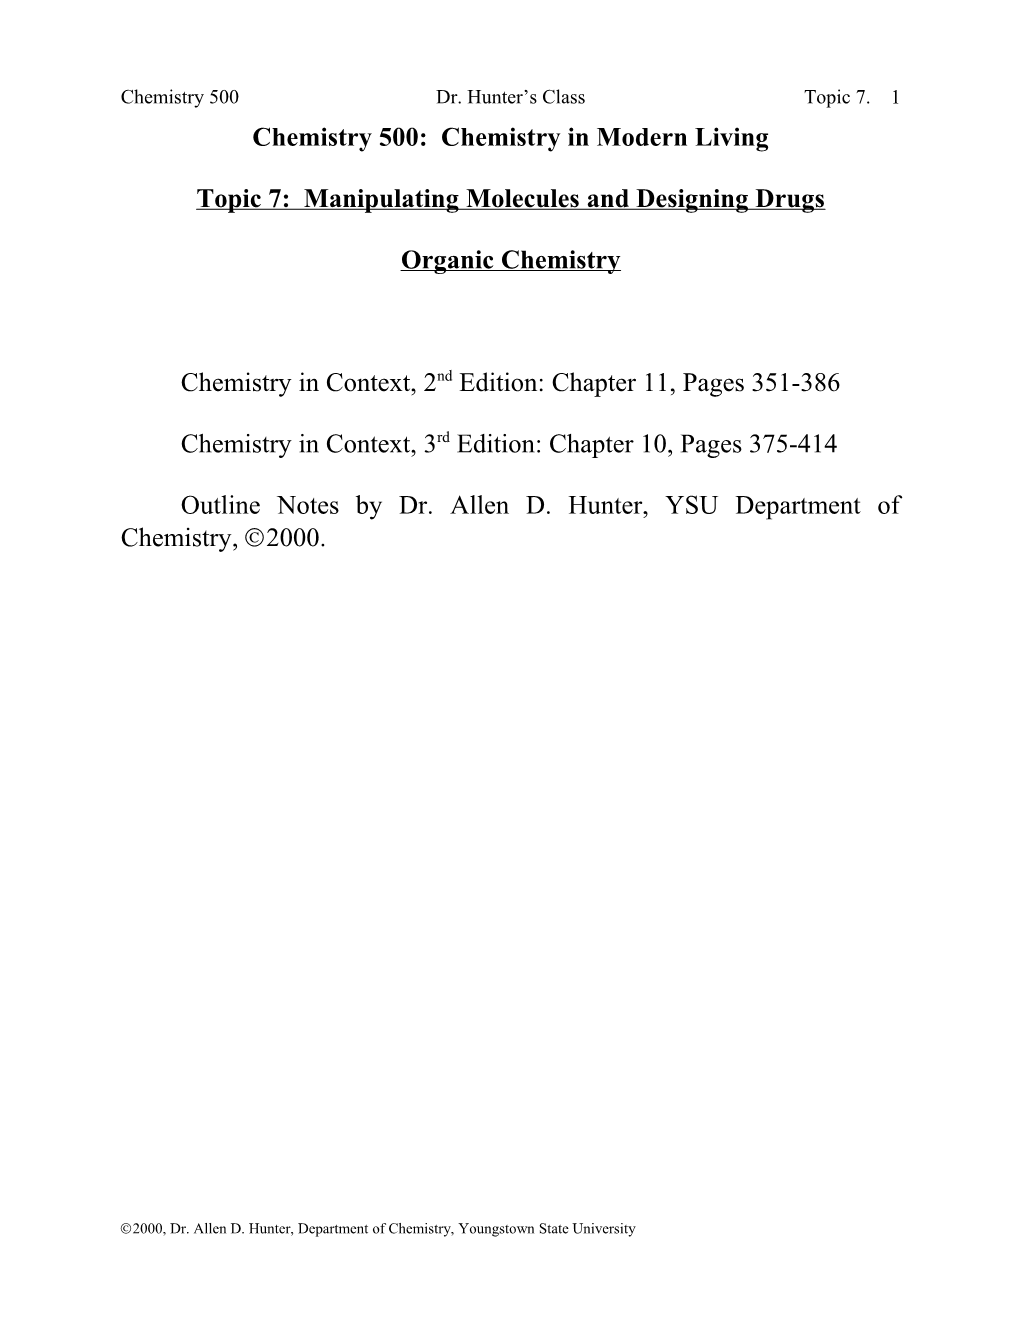 Topic 7: Manipulating Molecules and Designing Drugs